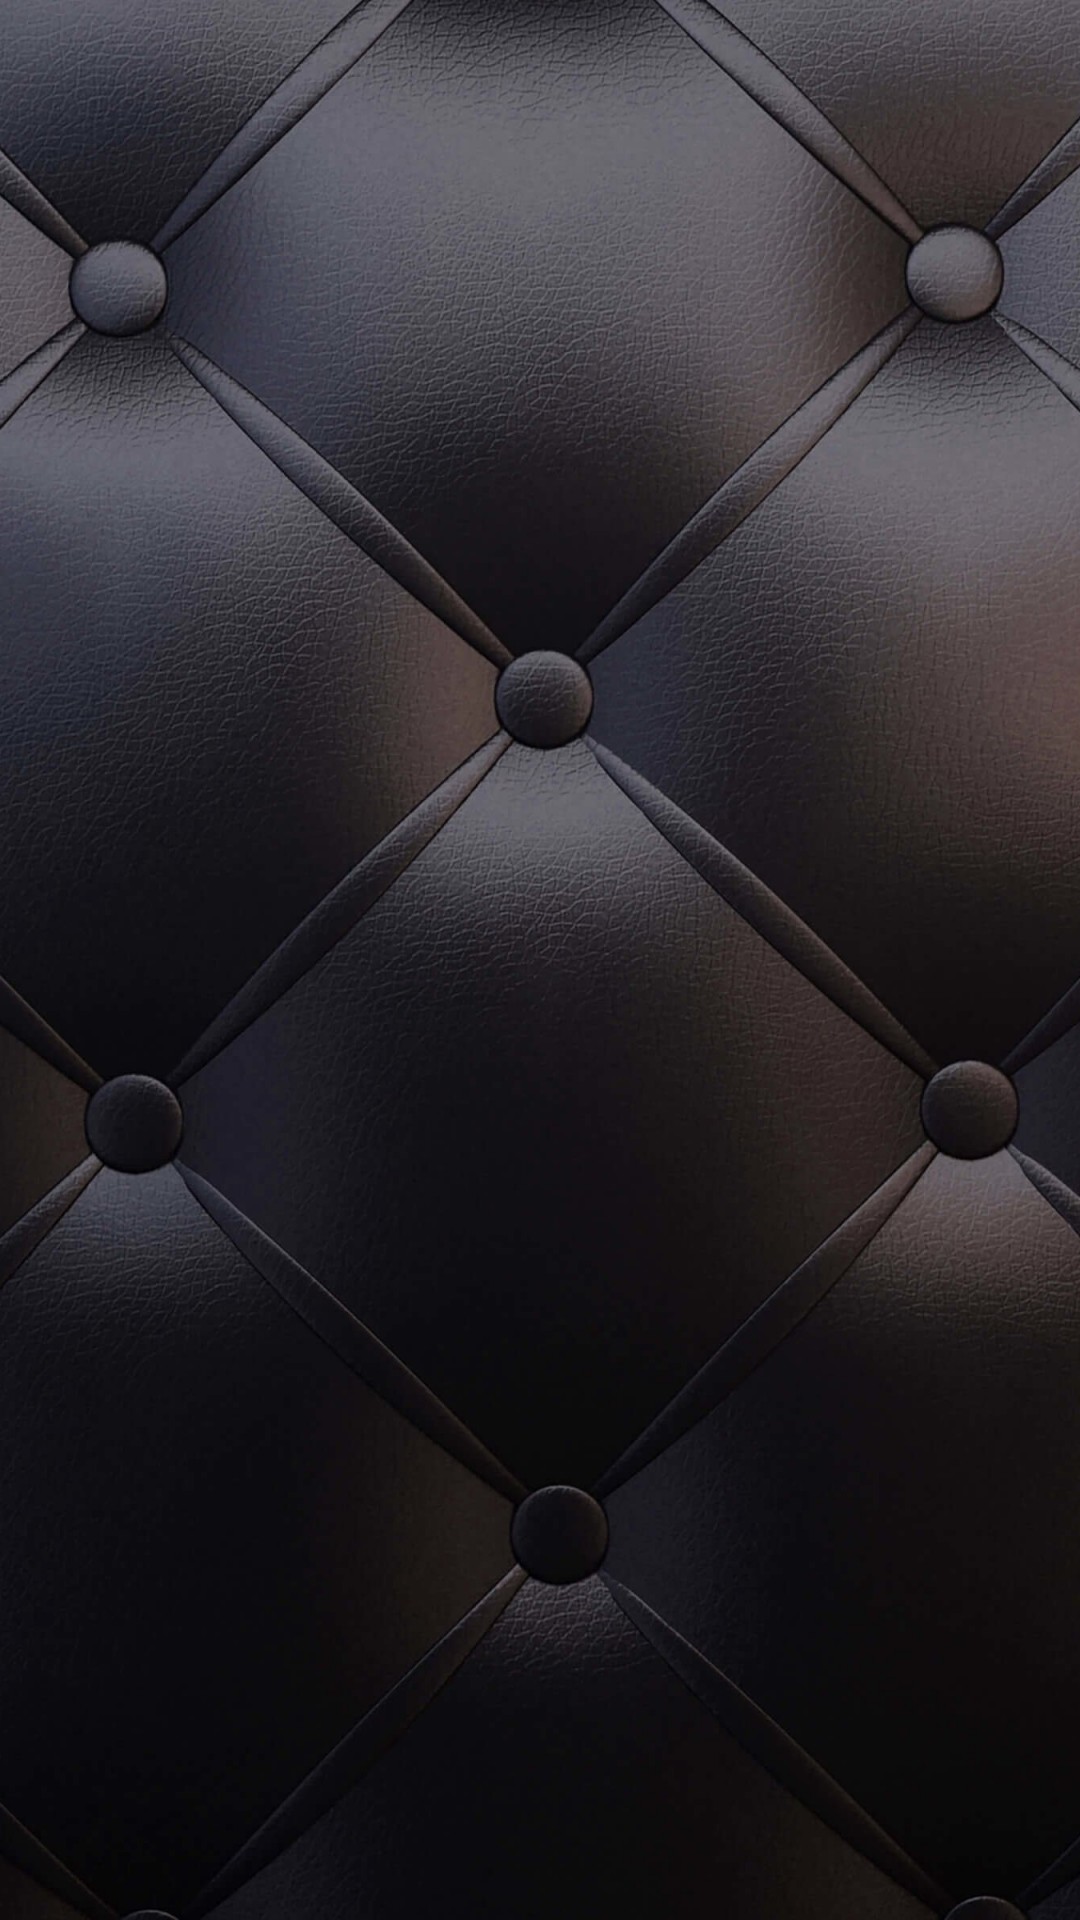 Black Leather Vintage Sofa Wallpaper for Google Nexus 5